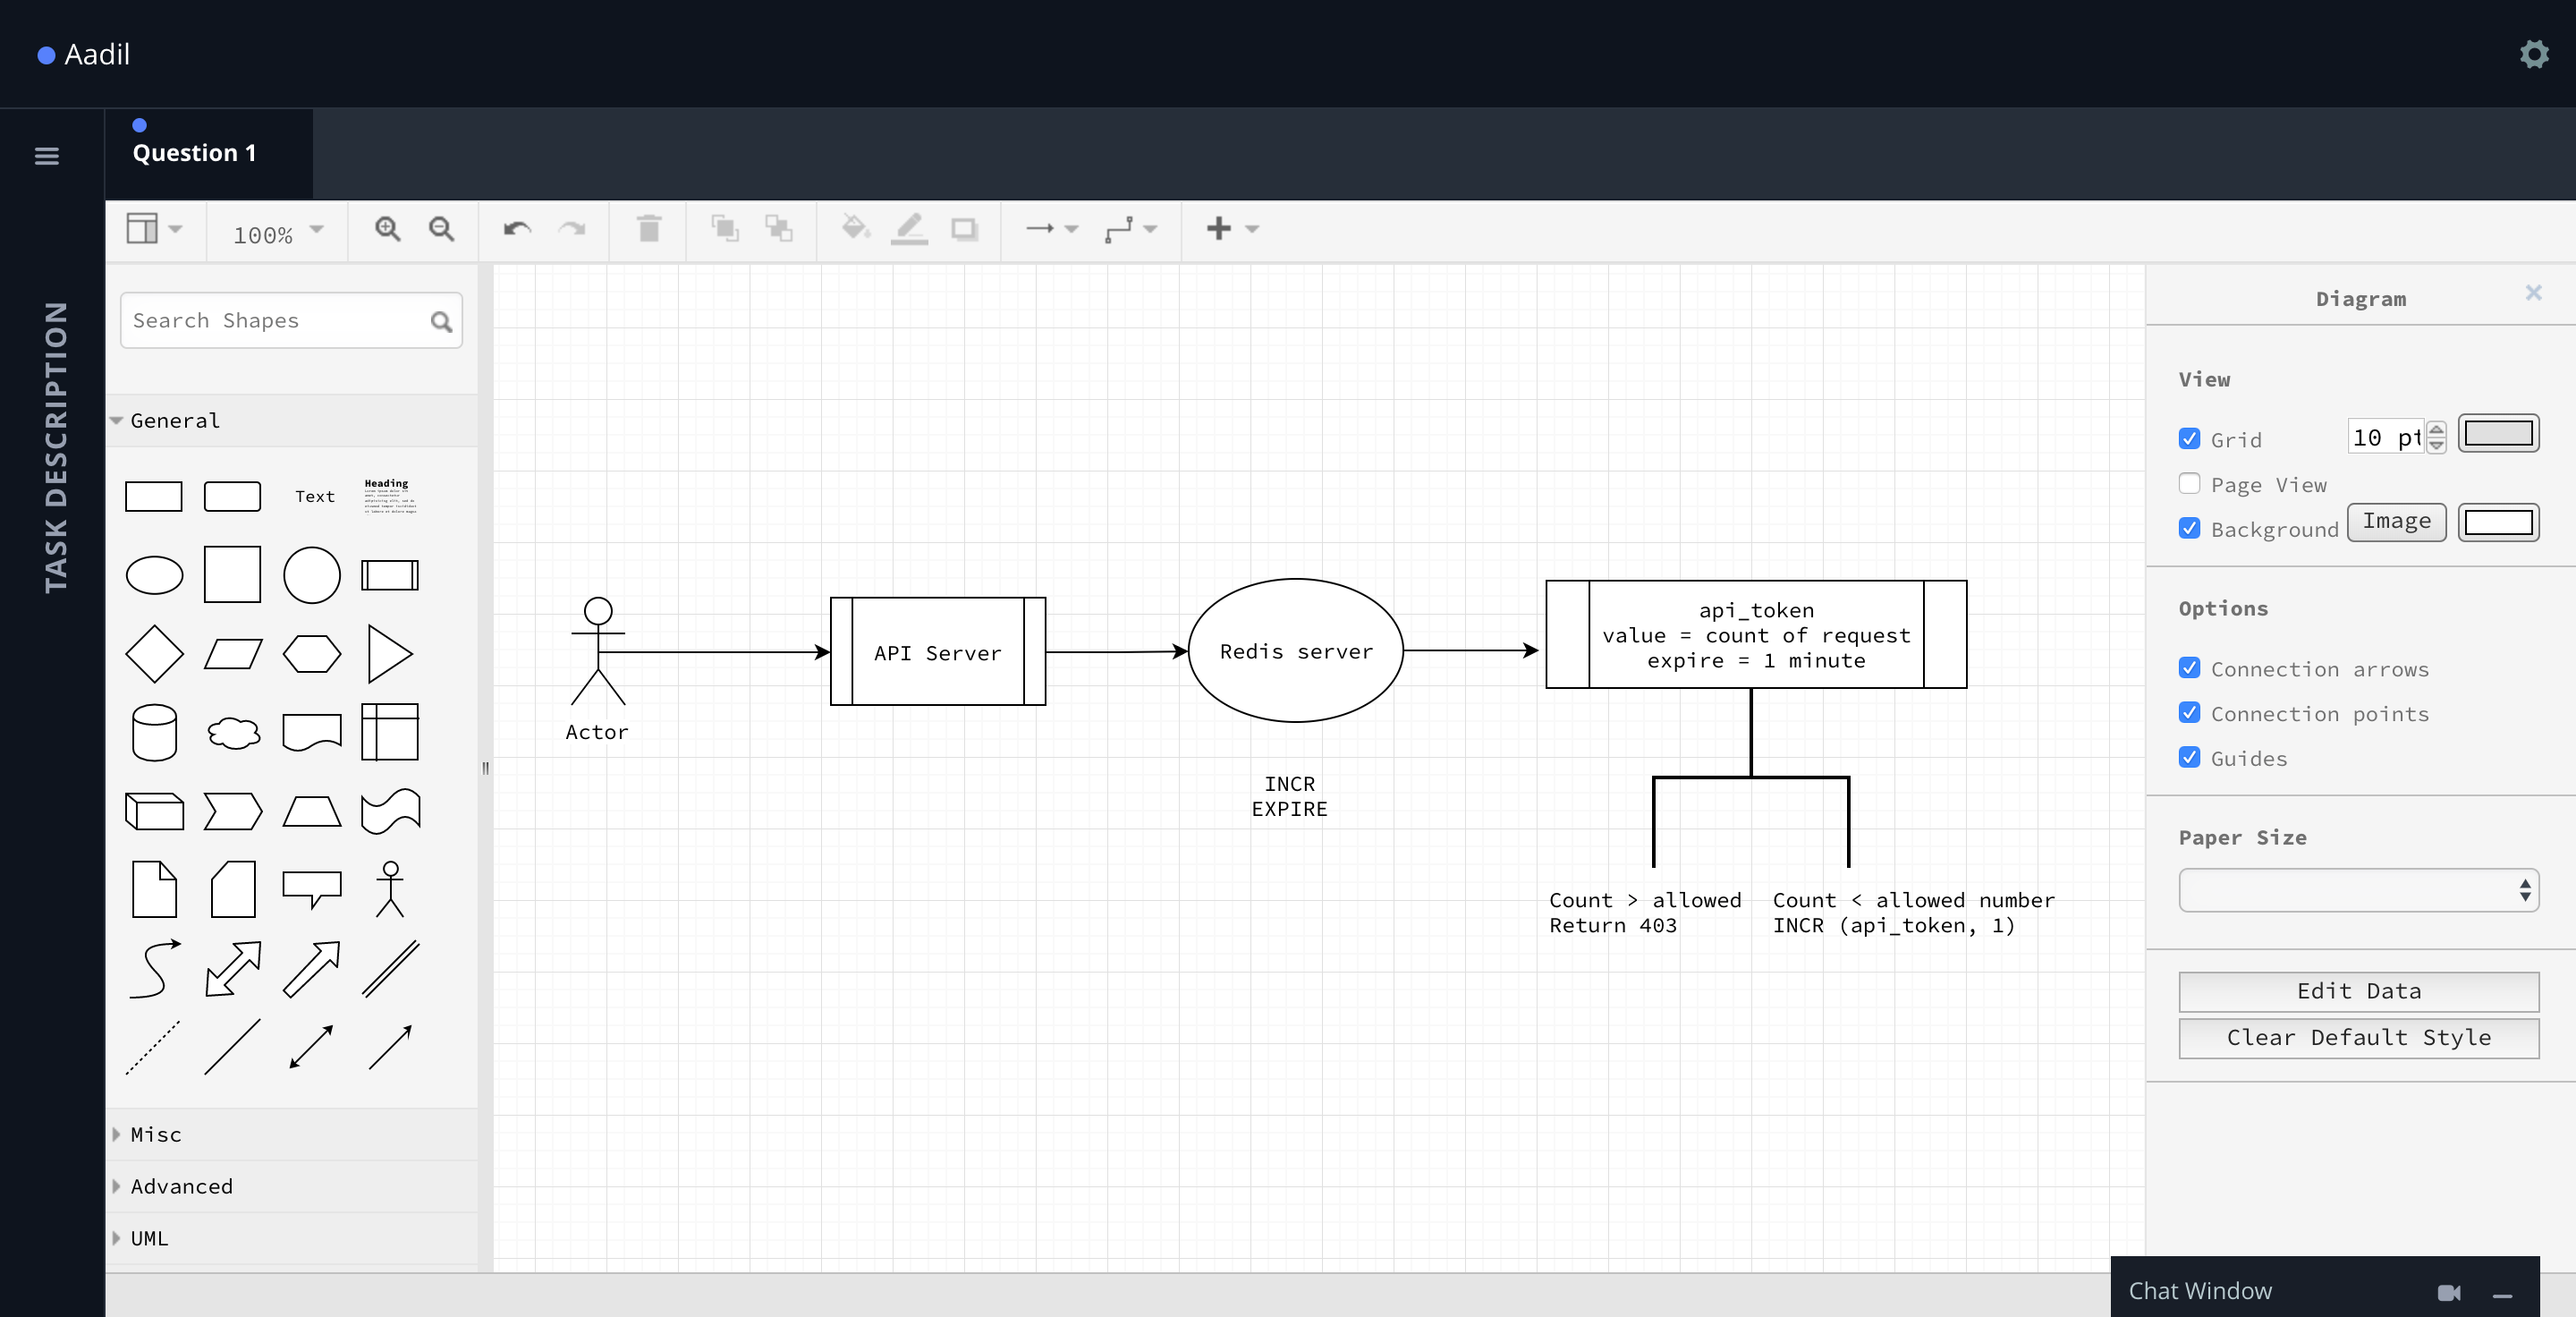 CodePair's virtual whiteboard interface